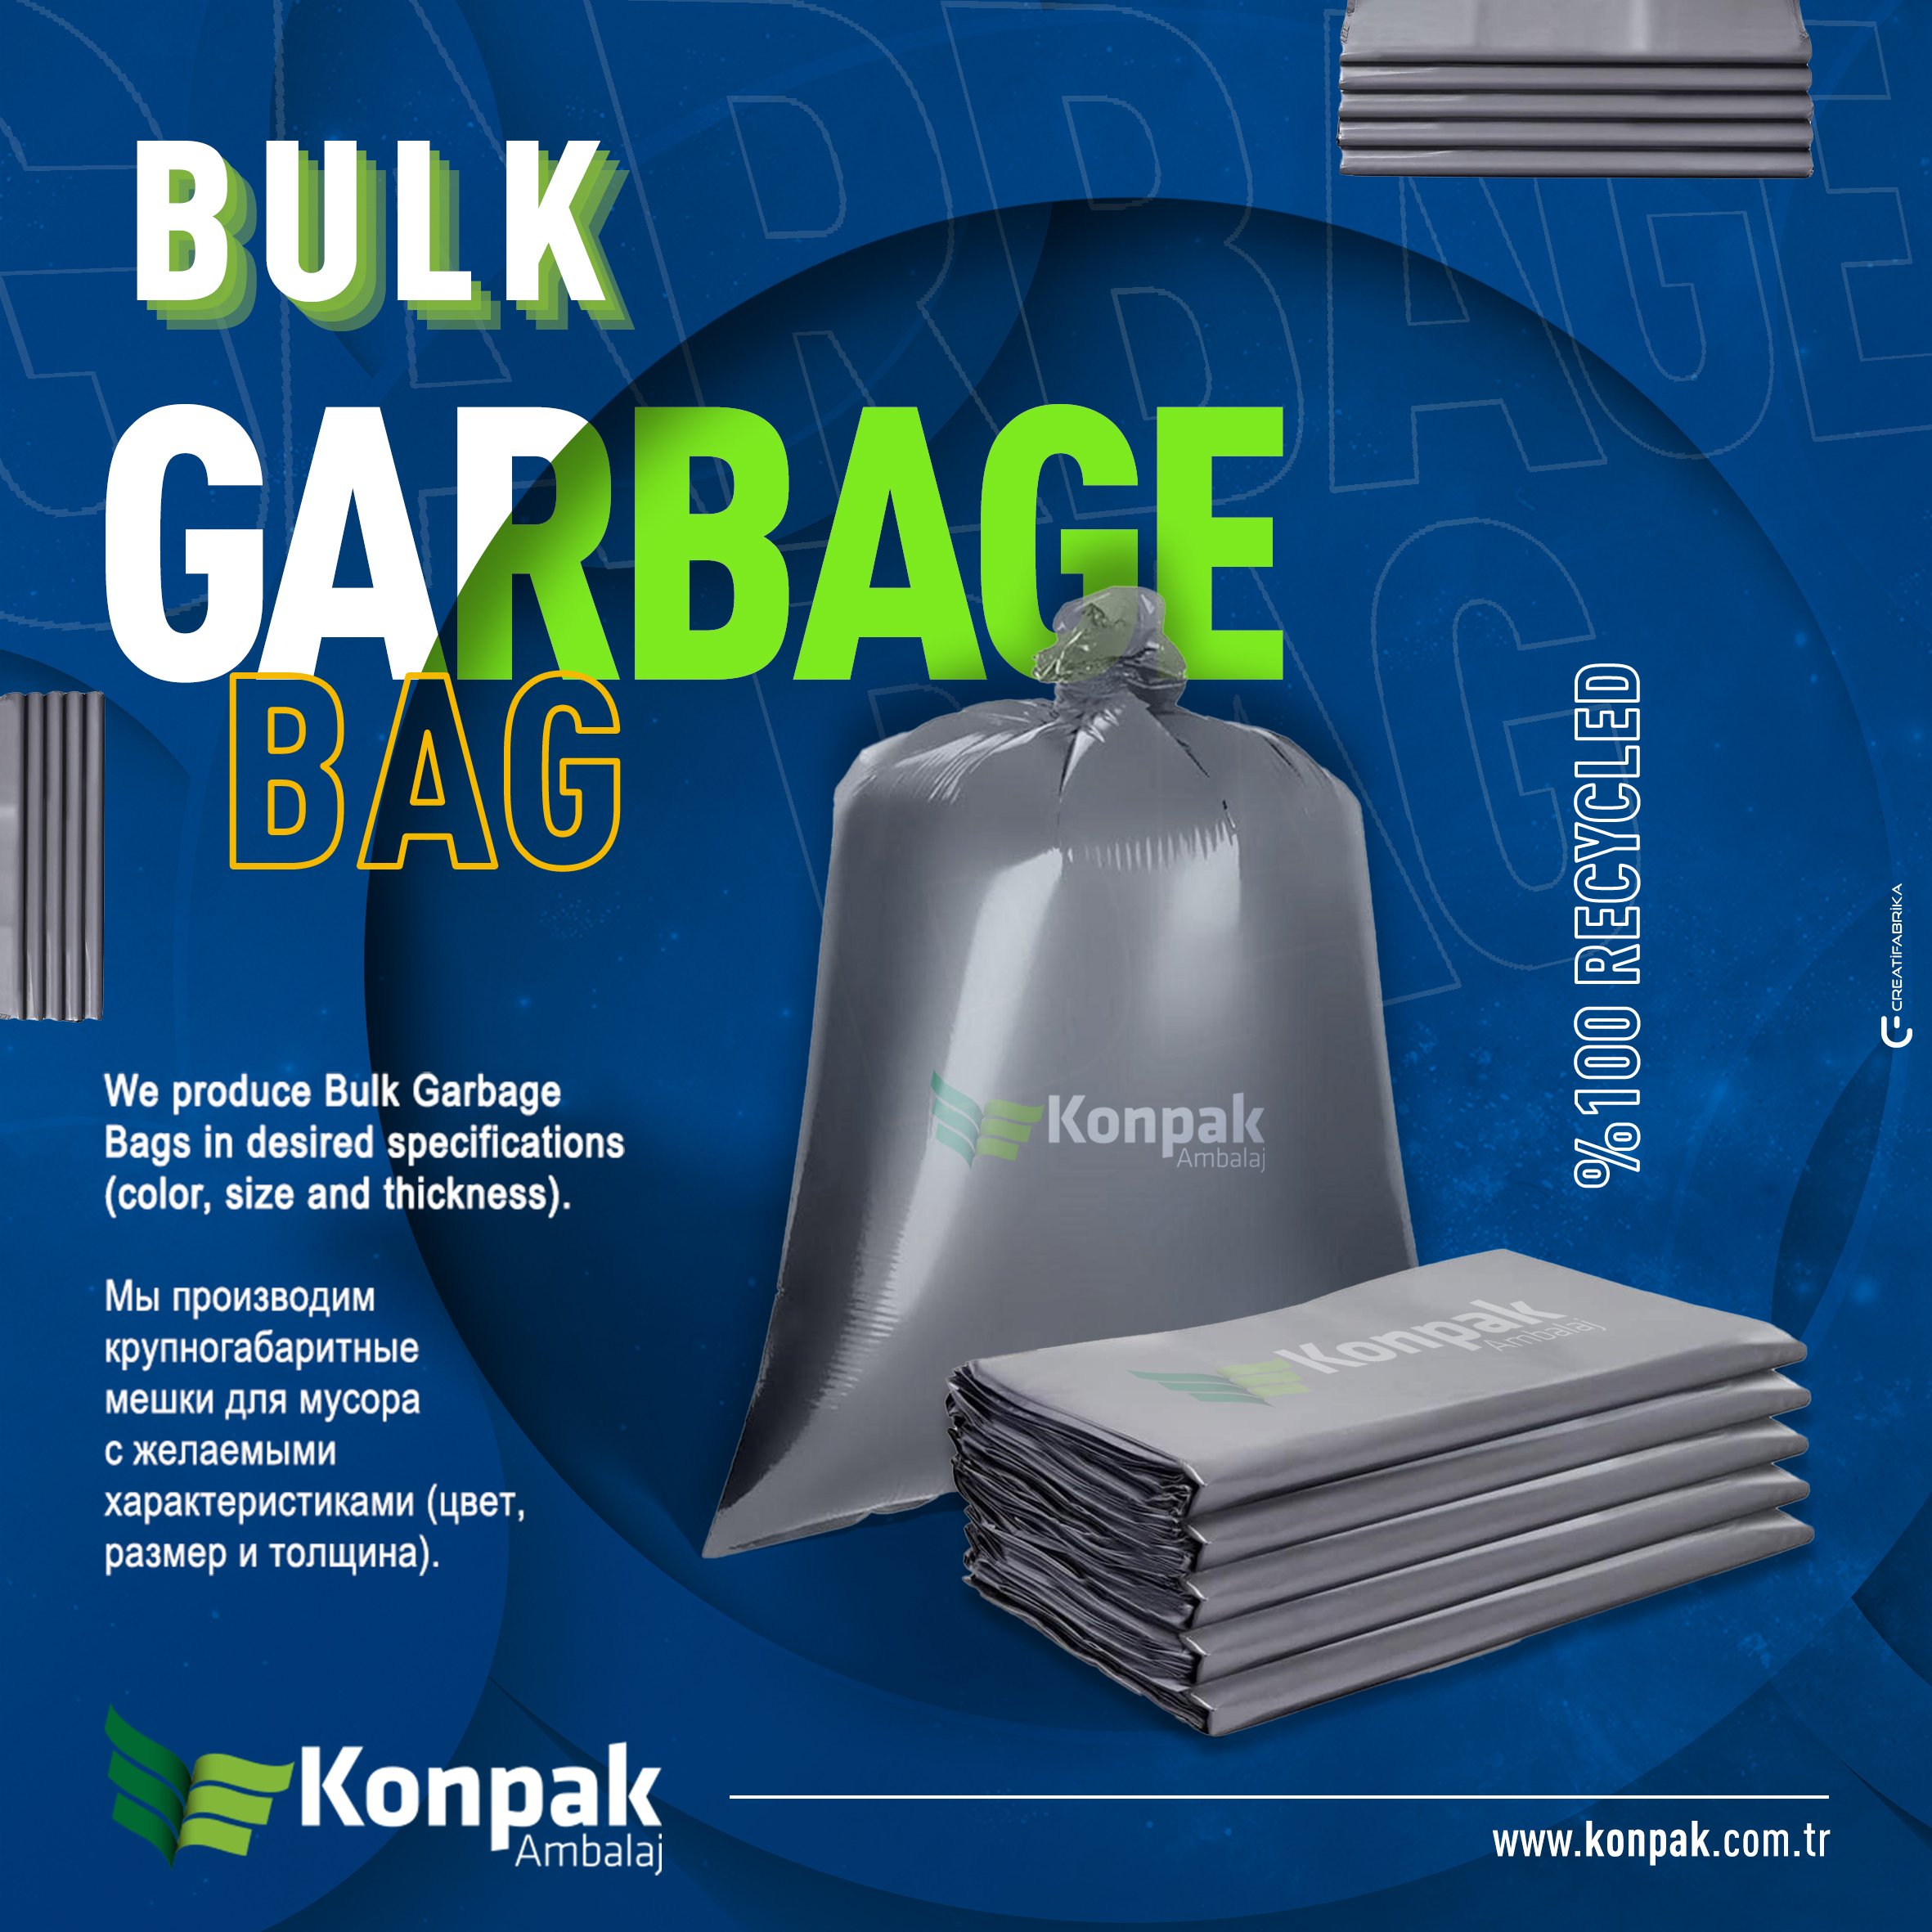 https://konpak.com.tr/wp-content/uploads/2022/12/Bulk-garbage-bag.jpg